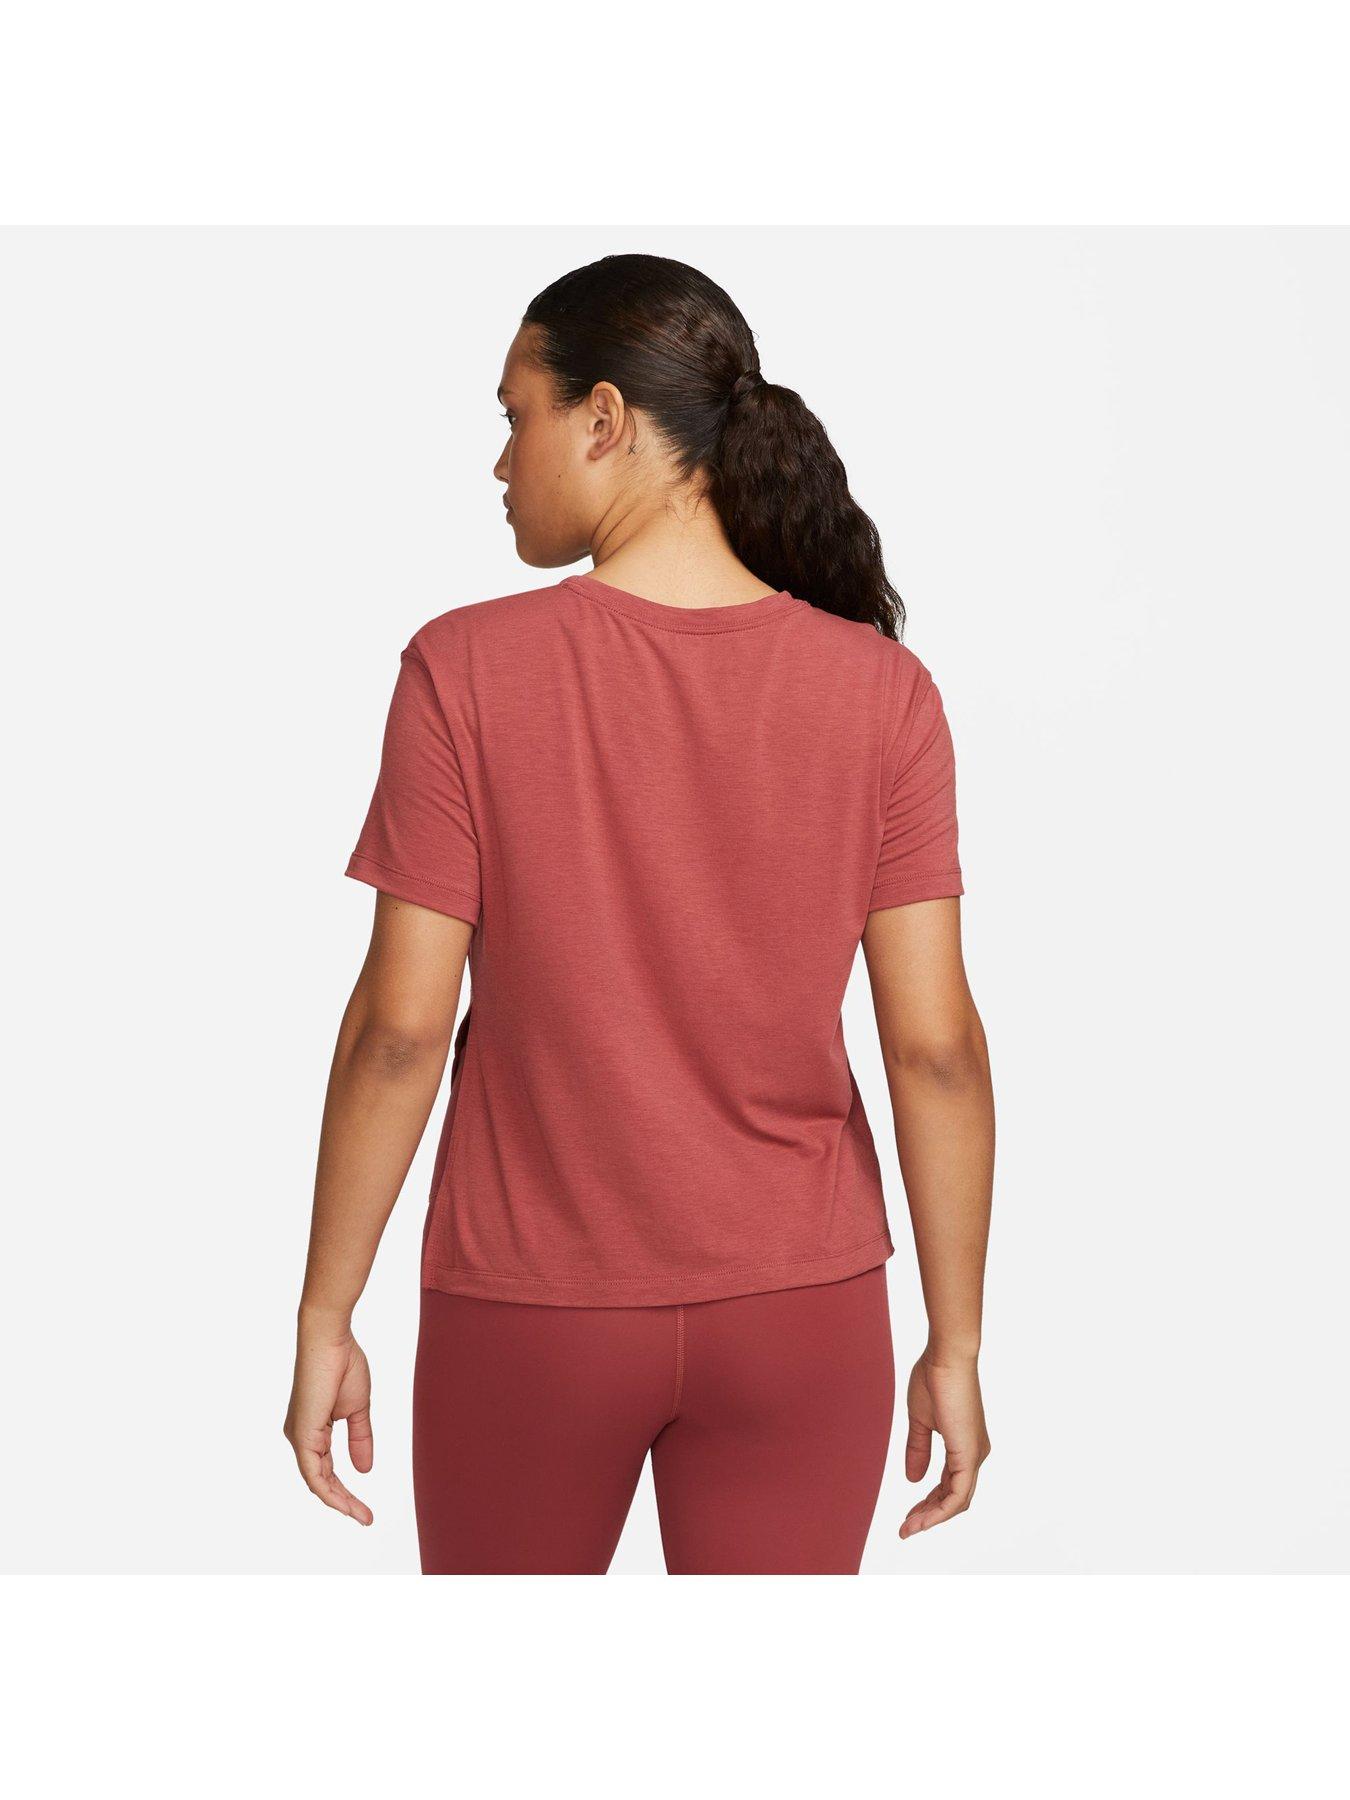 Nike Yoga Dri-FIT Long-Sleeve Top - Women's 